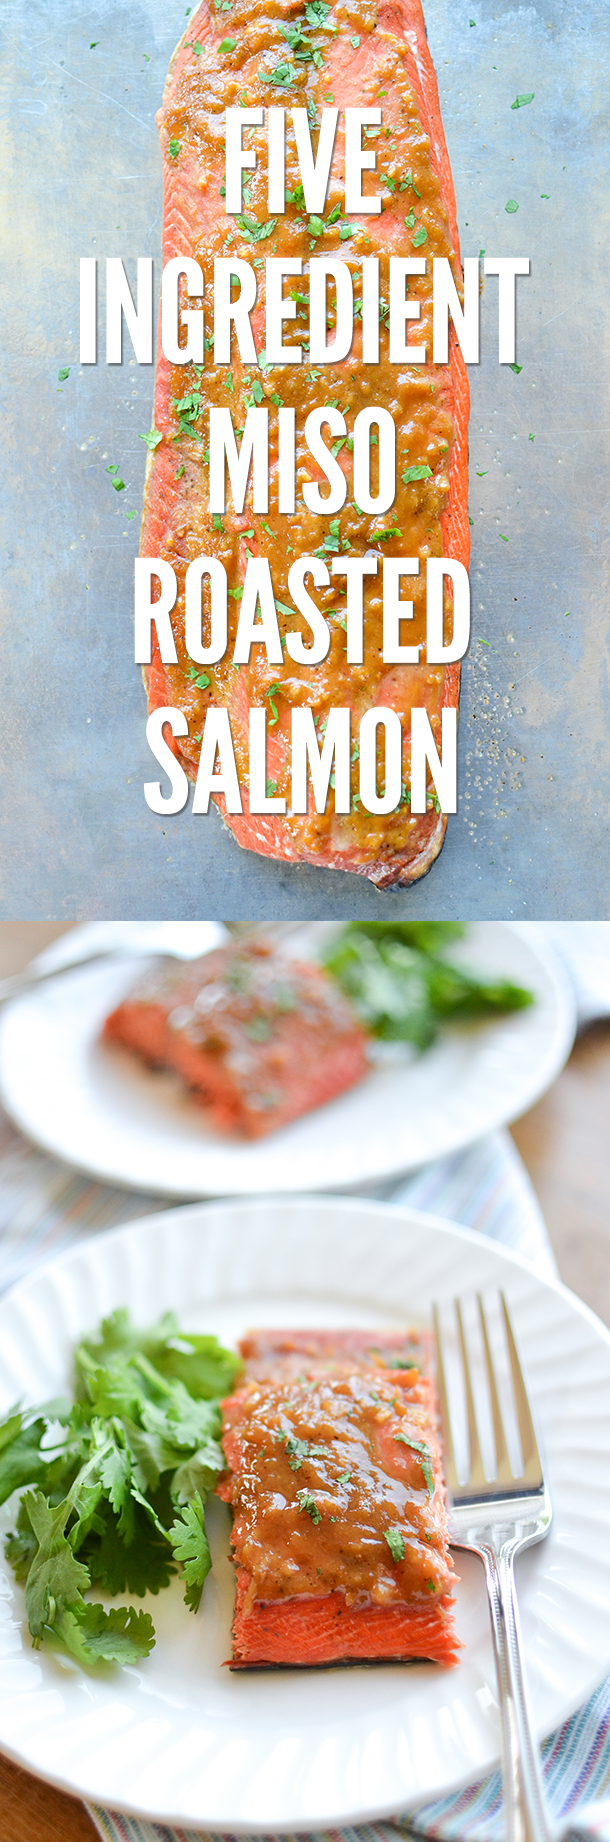 5 Ingredient Miso Roasted Salmon | simplywhisked.com